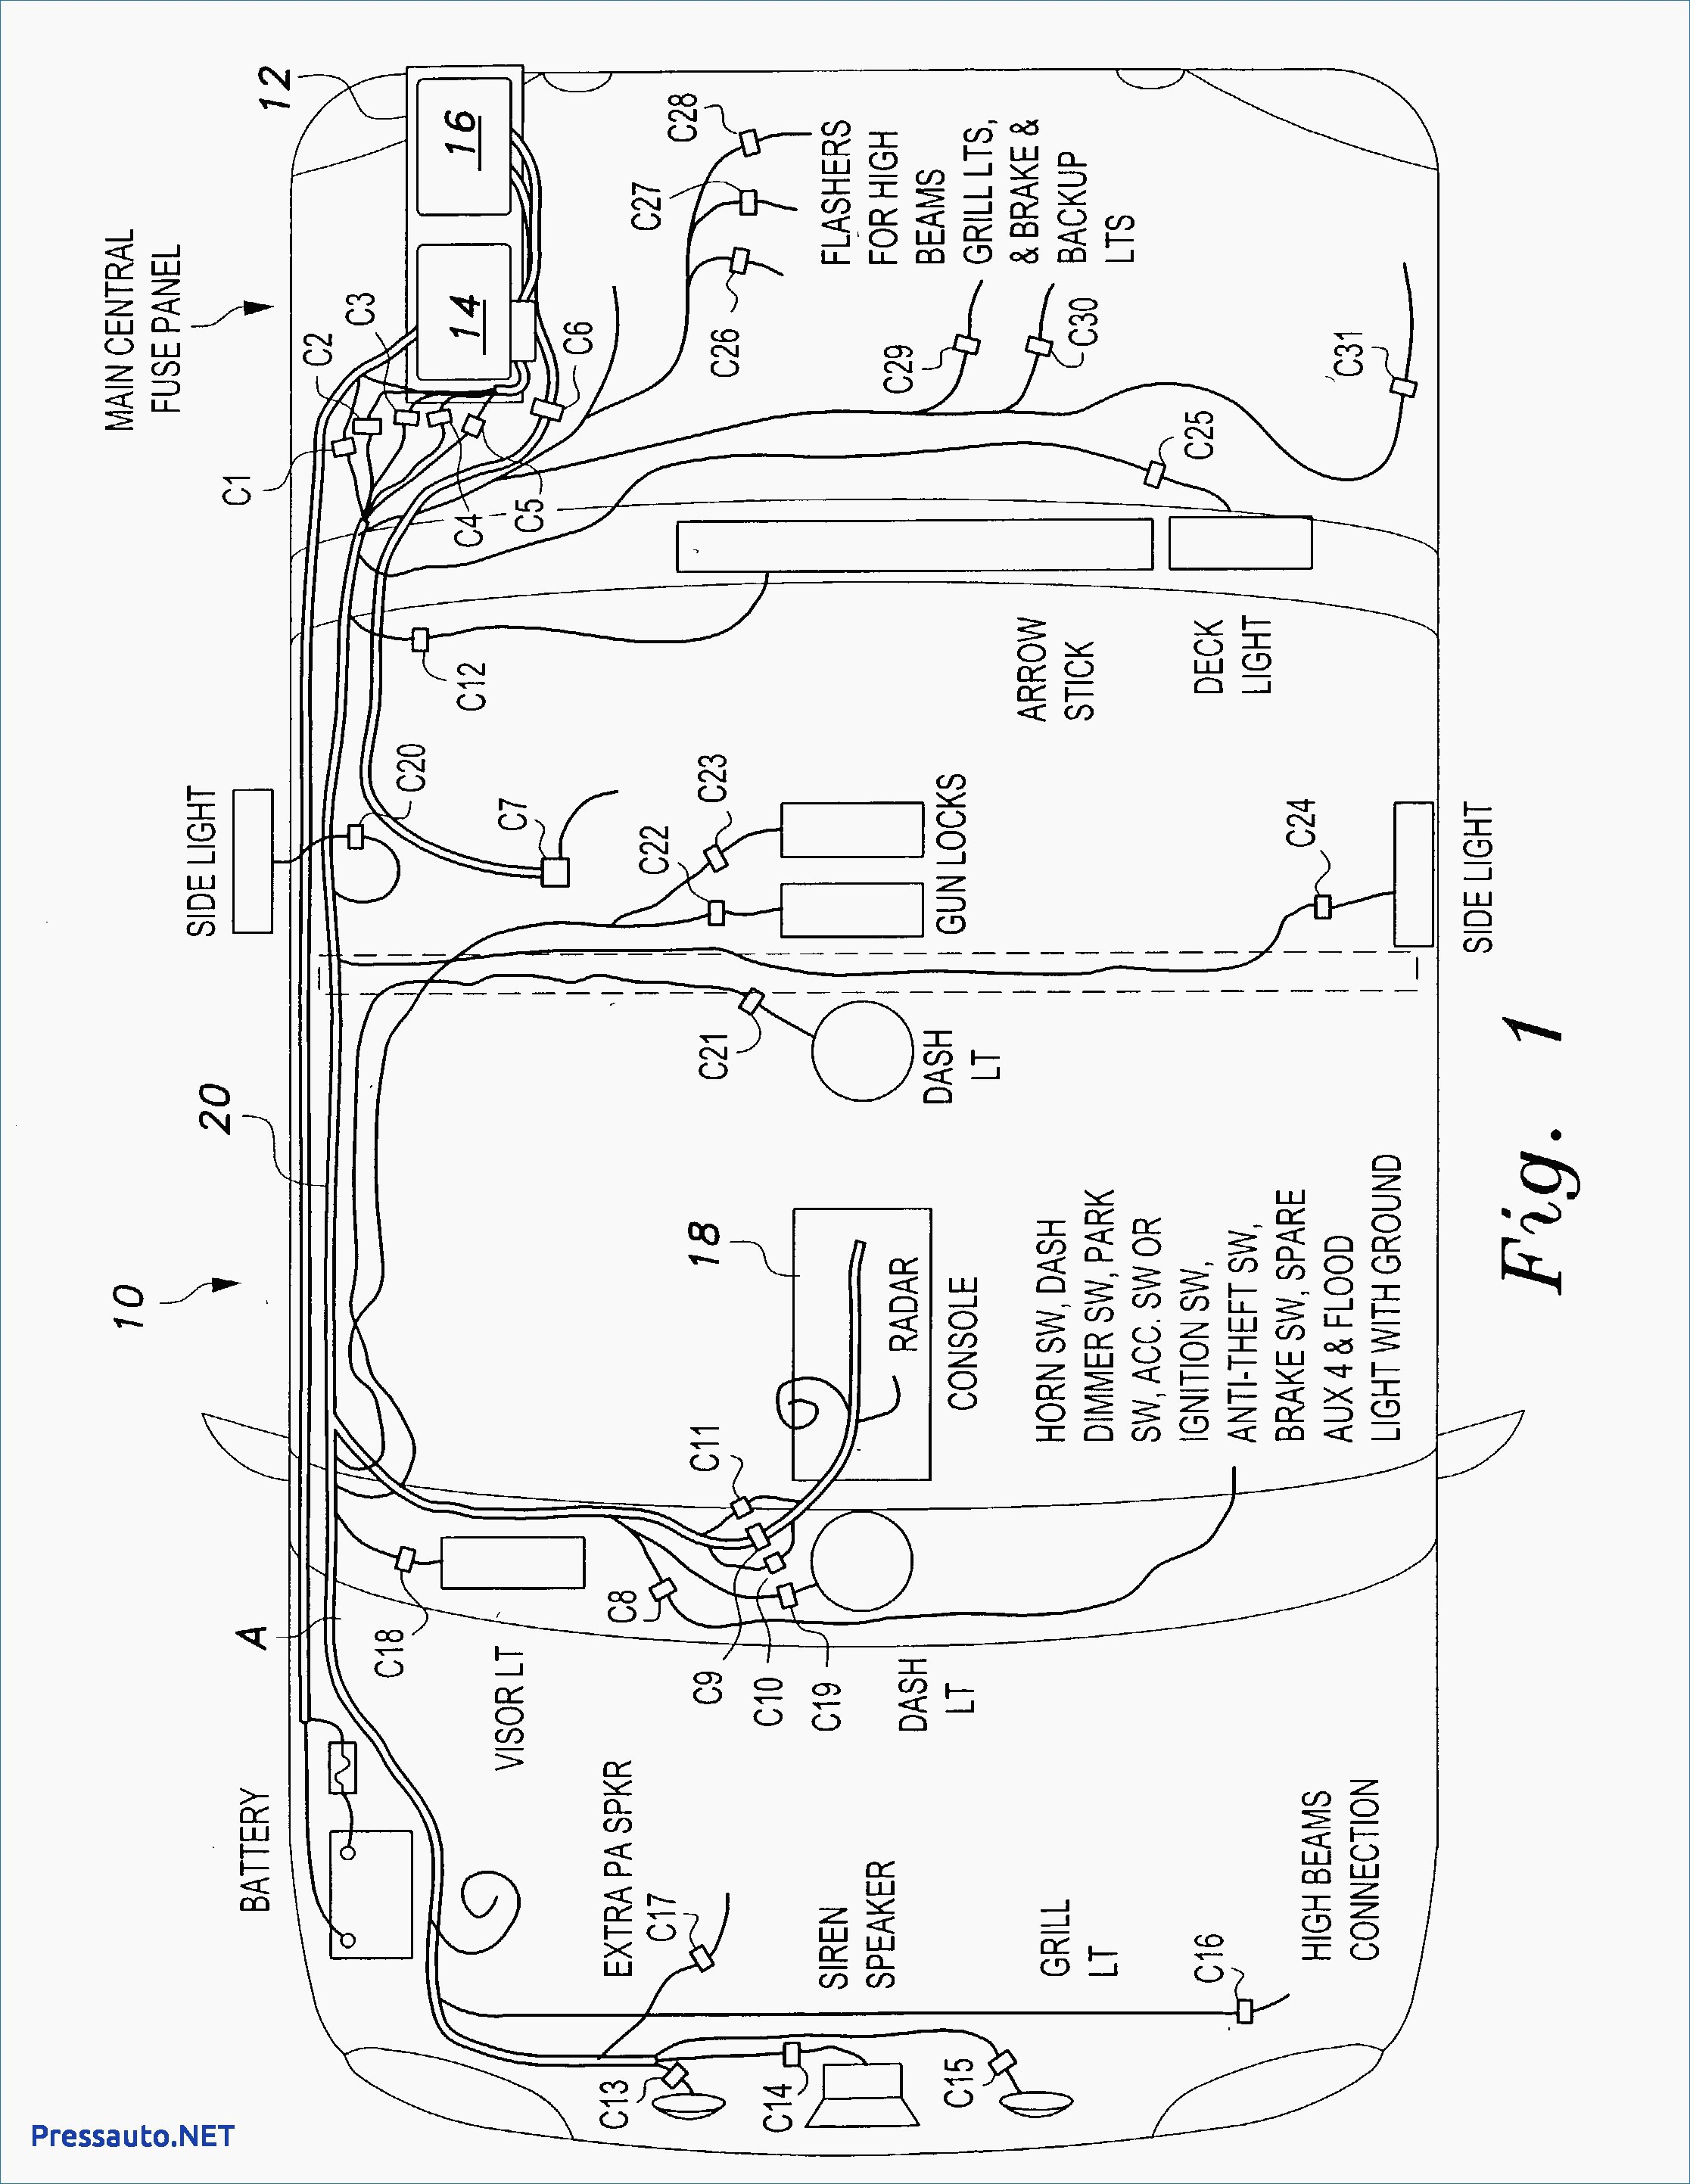 Federal Signal Pa300 Wiring Diagram Elegant Federal Signal Pa300 Wiring Diagram Wiring Diagram For Federal